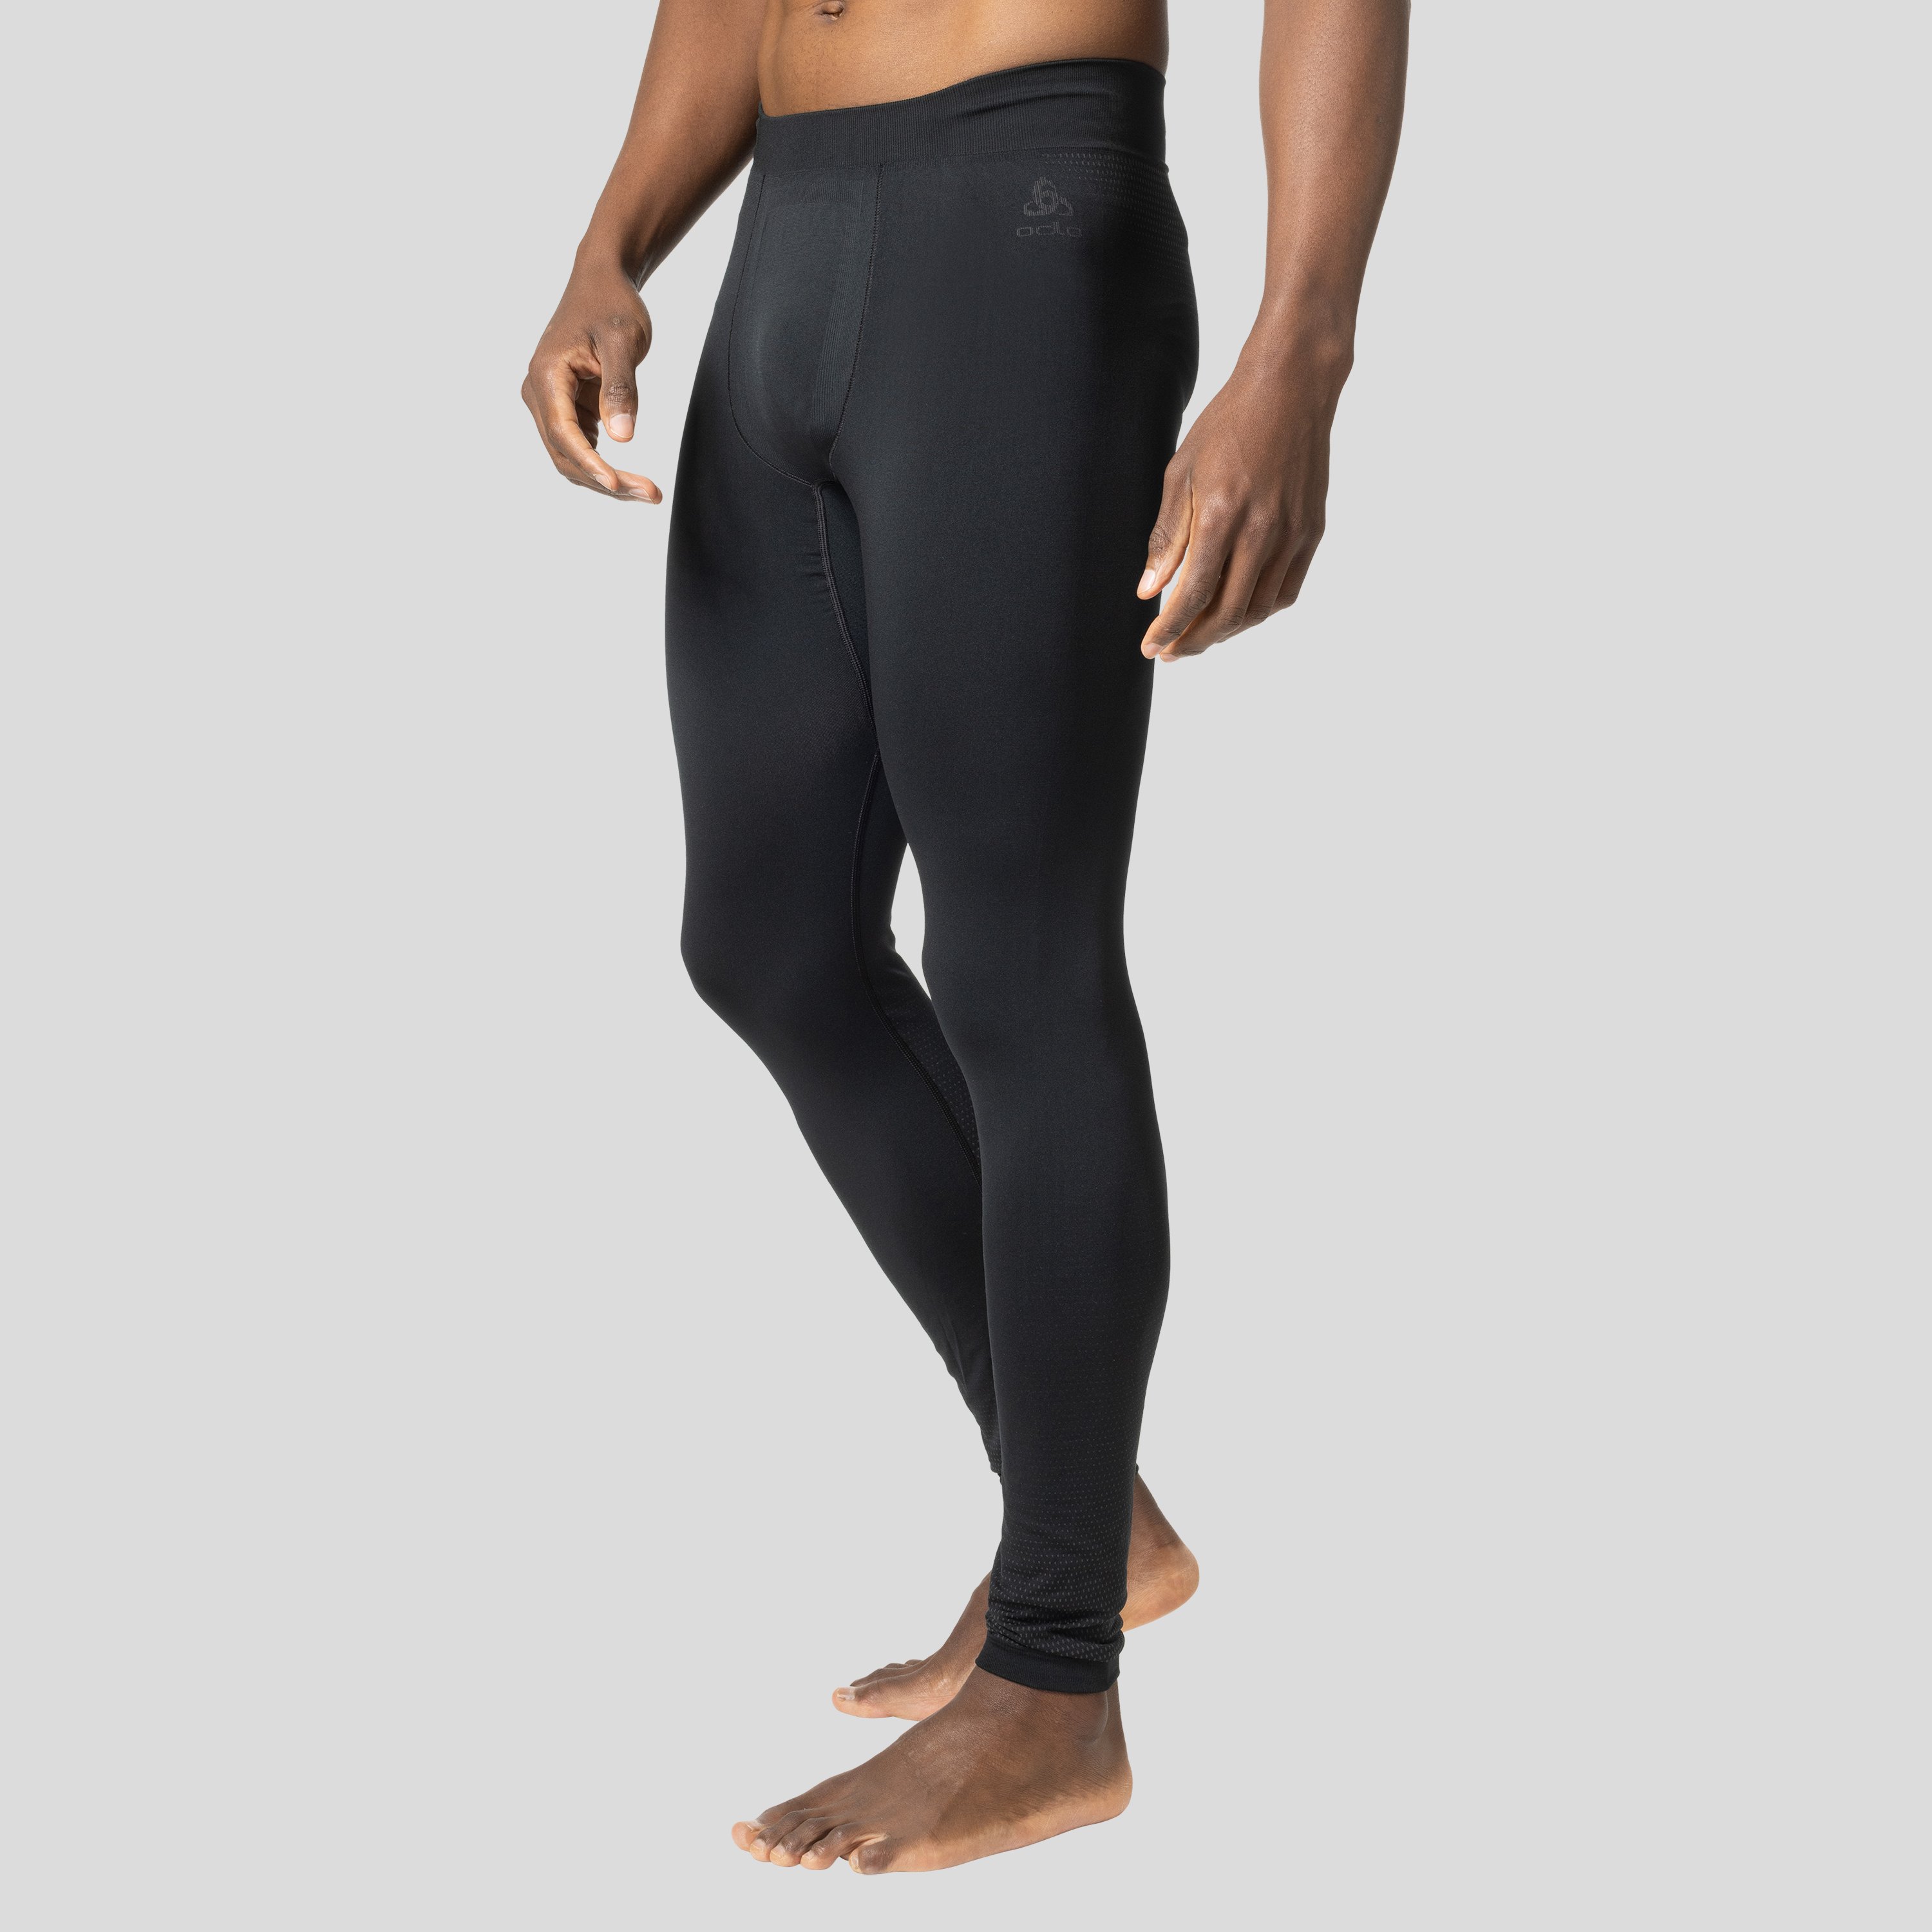 ODLO Performance Light Base-Layer-Pants für Herren, L, schwarz